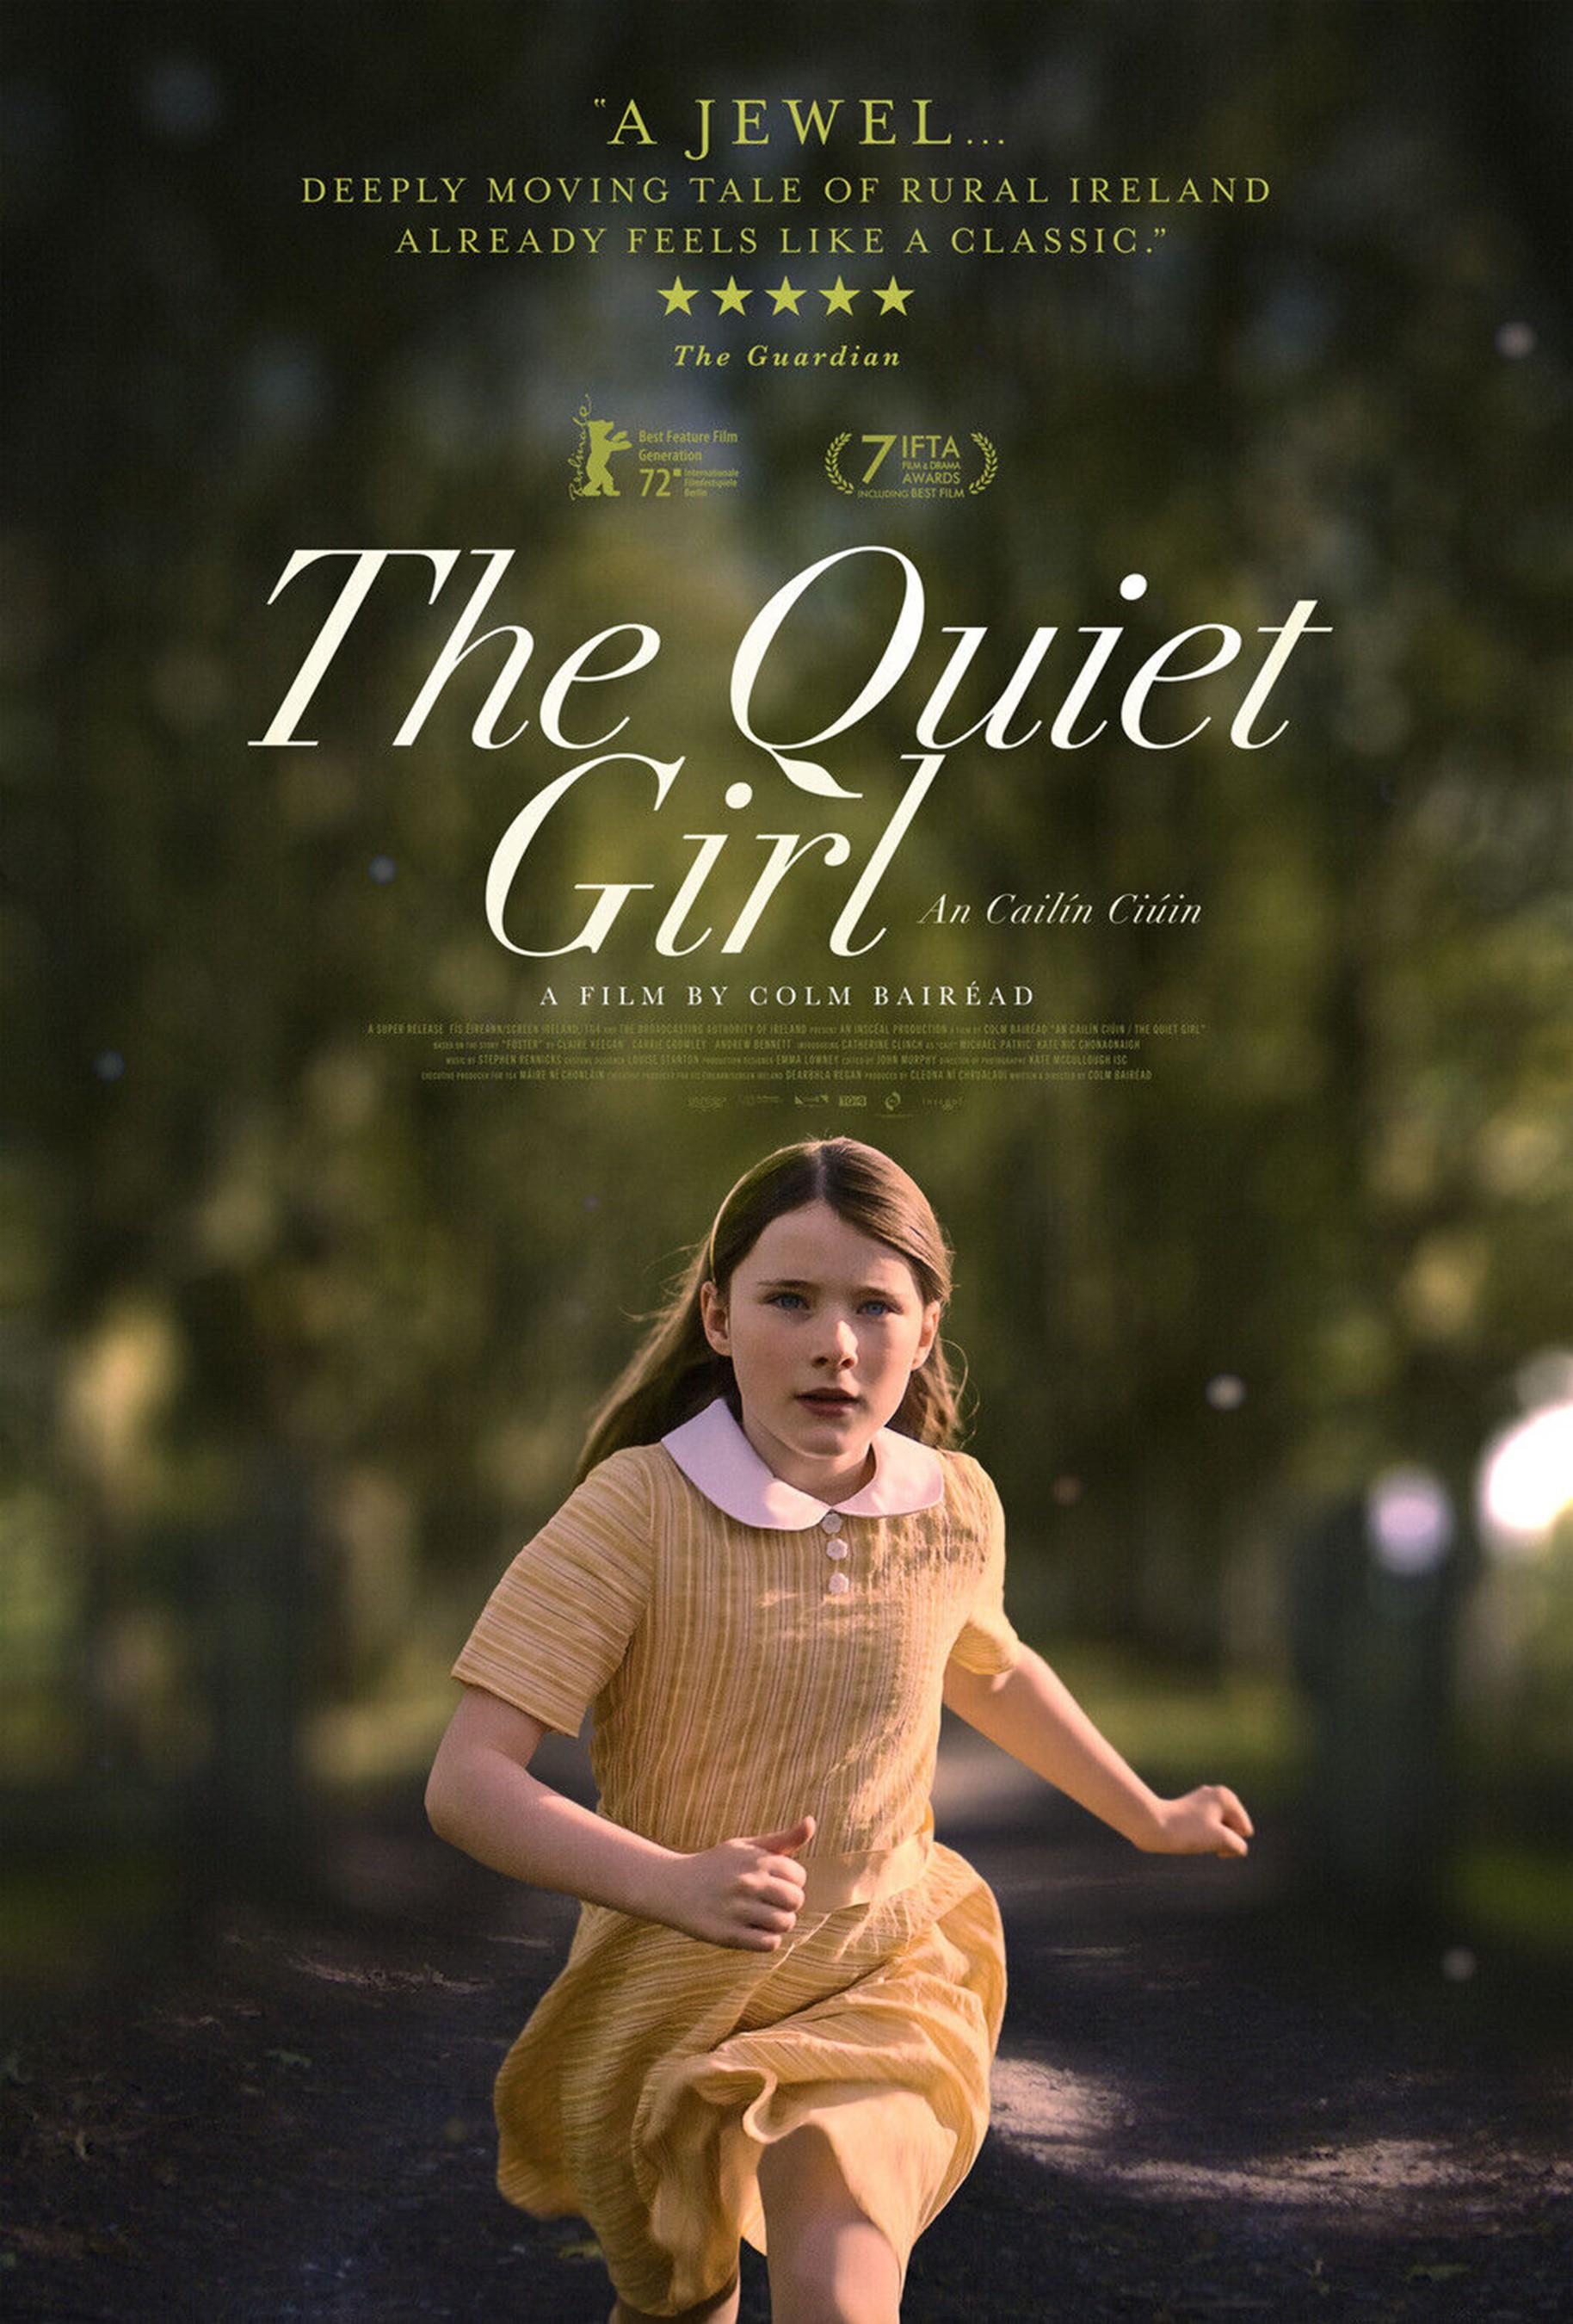 The Quiet Girl movie poster girl in yellow dress running towards camera